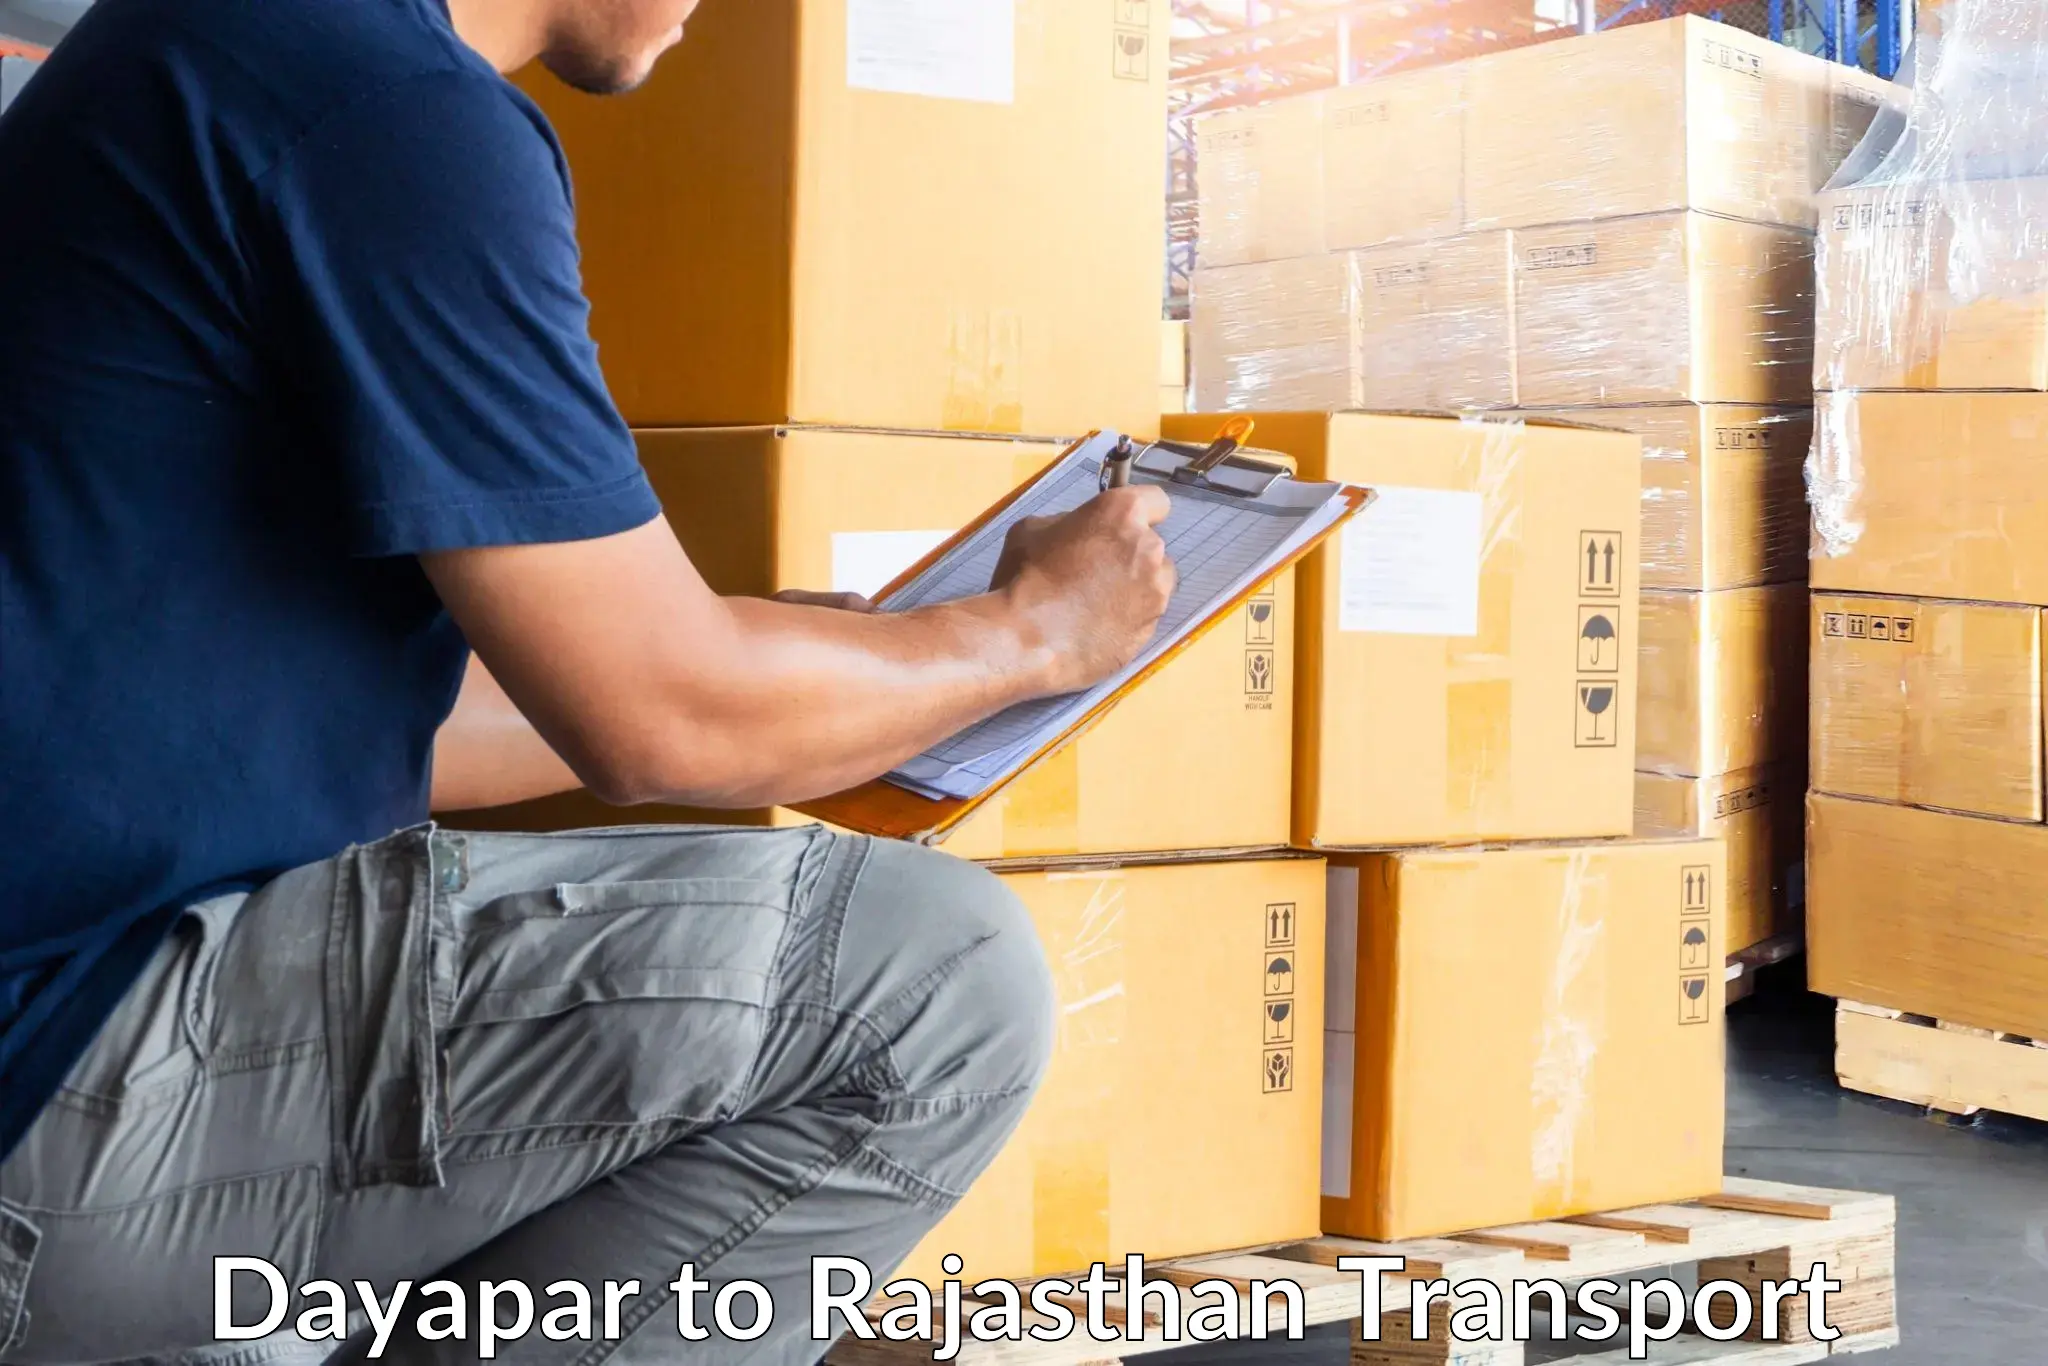 Furniture transport service Dayapar to Jodhpur